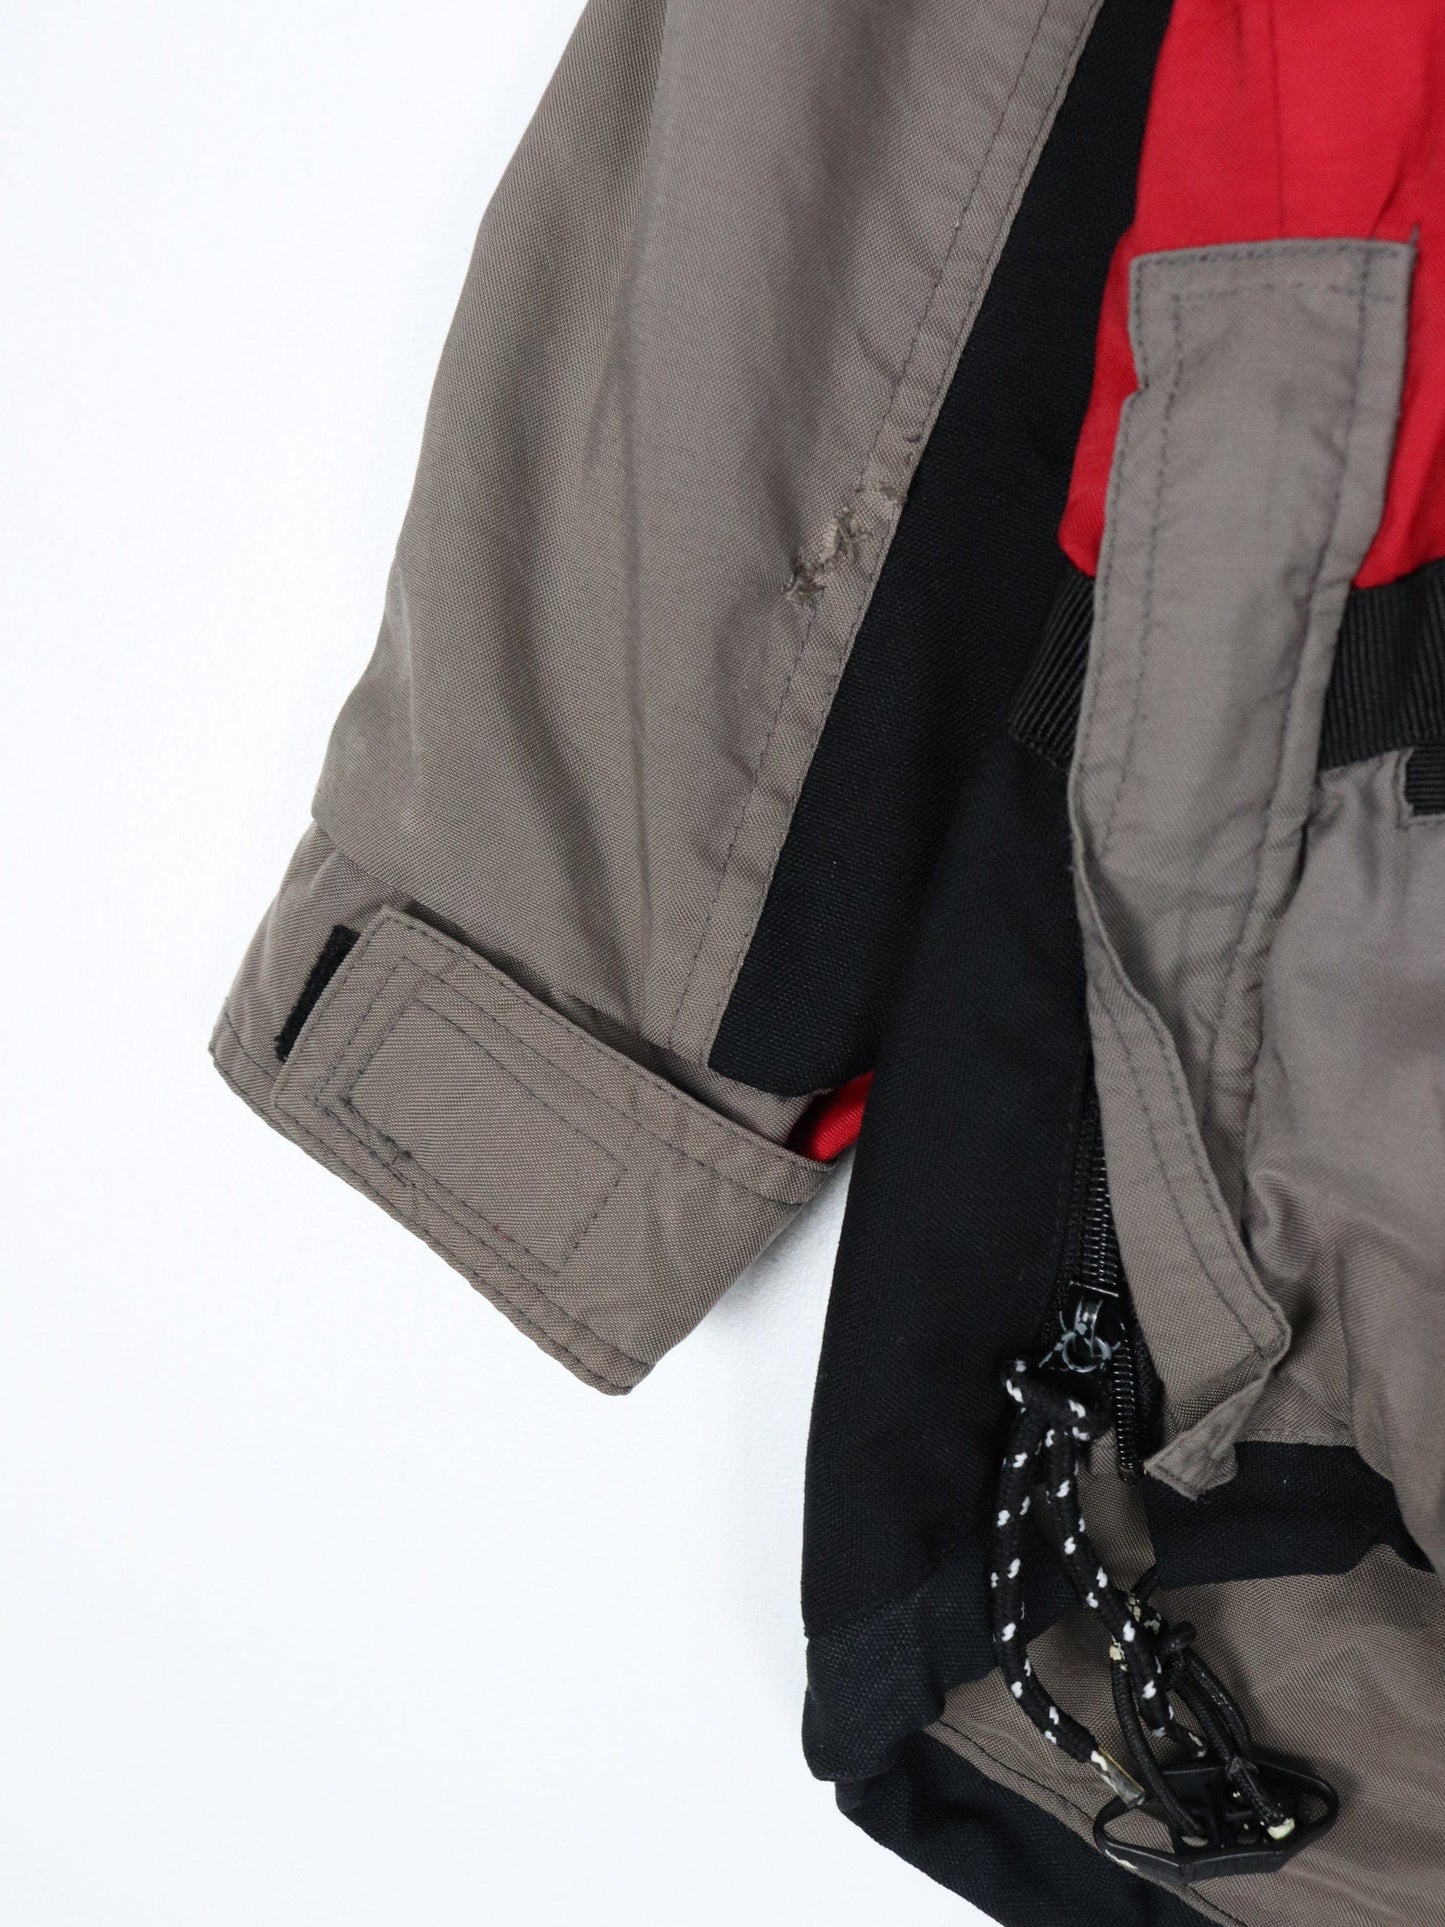 Other Jackets & Coats Vintage Boulder Gear Jacket Mens Medium Red Anorak Outdoors Hiking